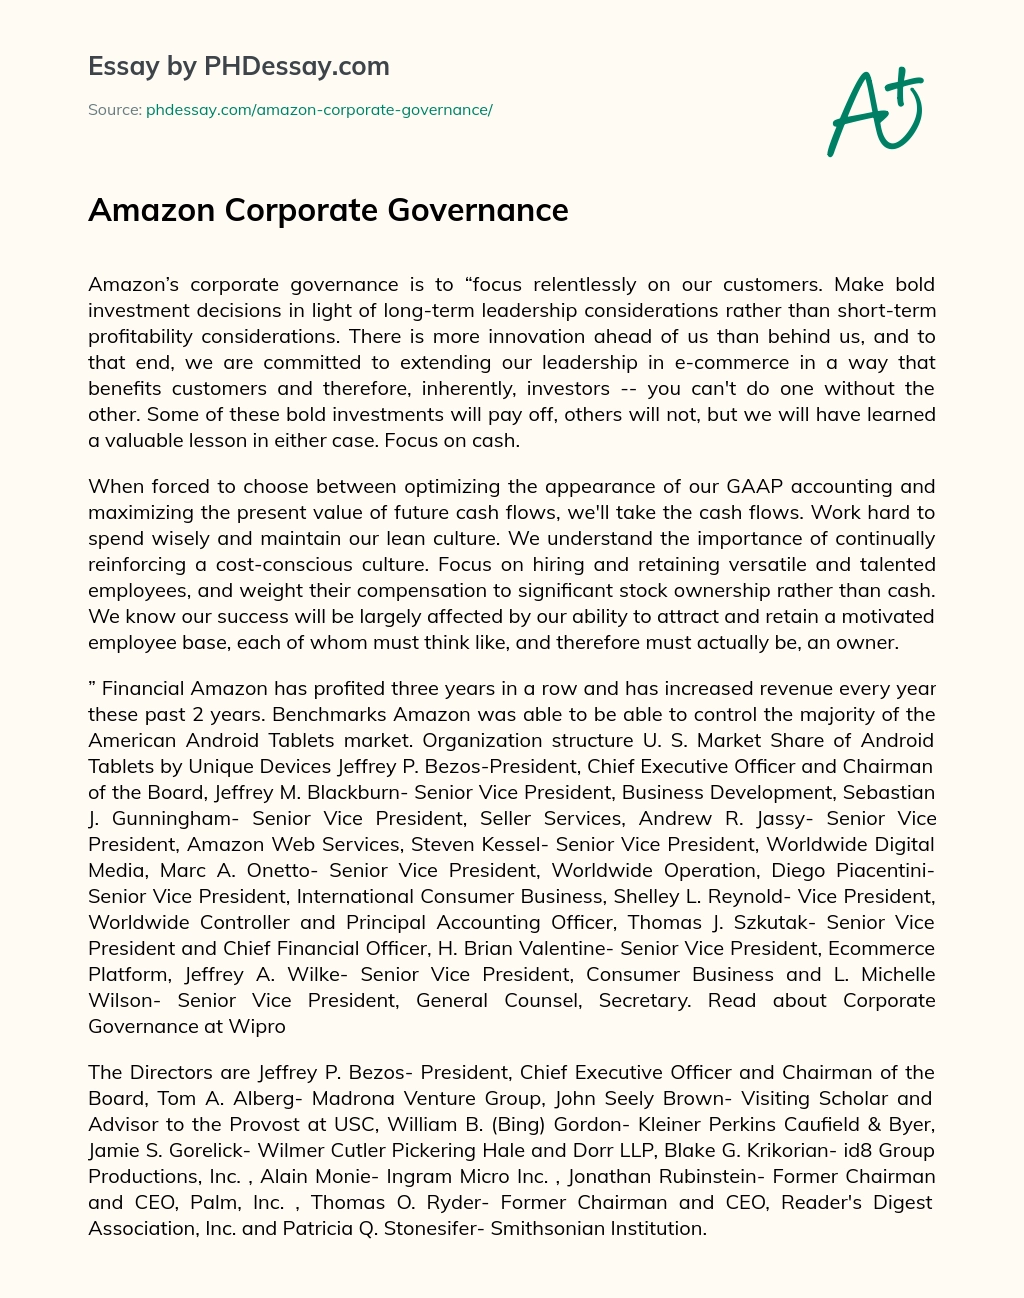 Amazon Corporate Governance essay